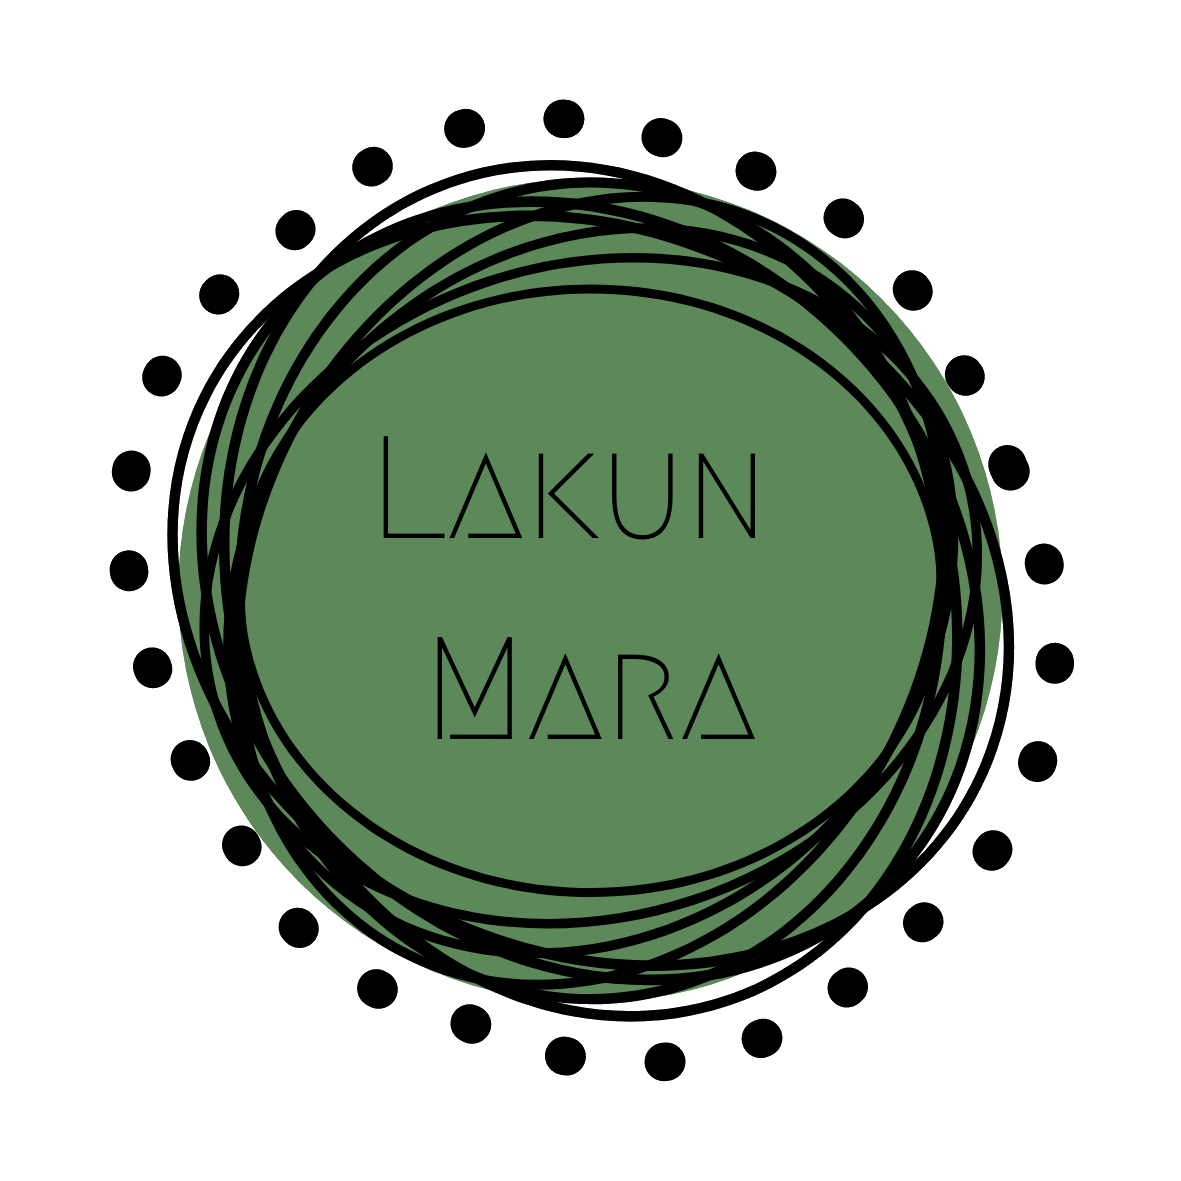 Lakun Mara